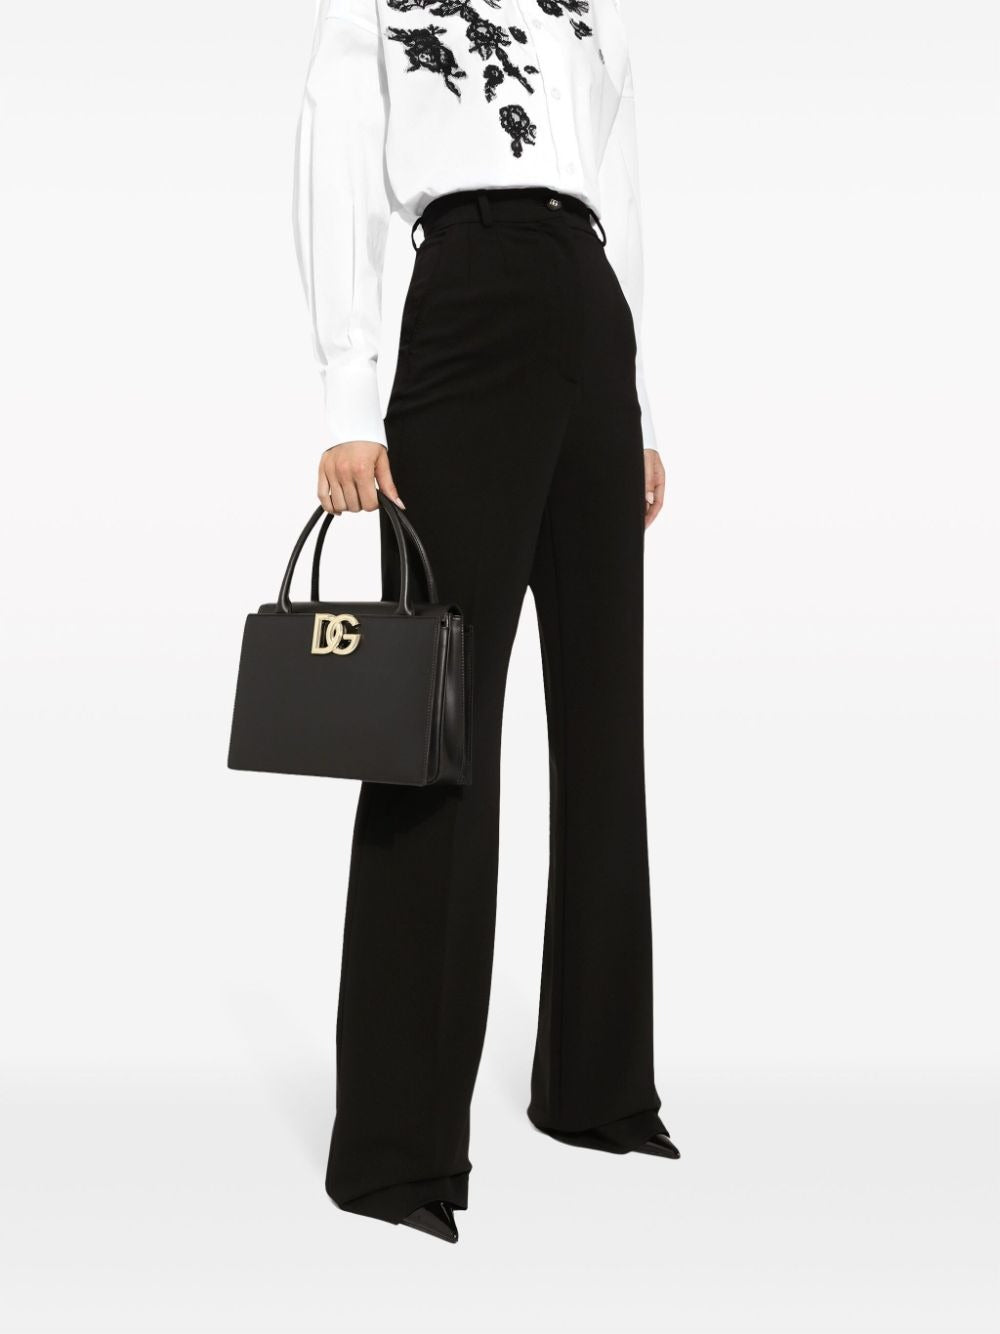 Dolce & Gabbana Logo-Plaque Leather Tote Bag in Black